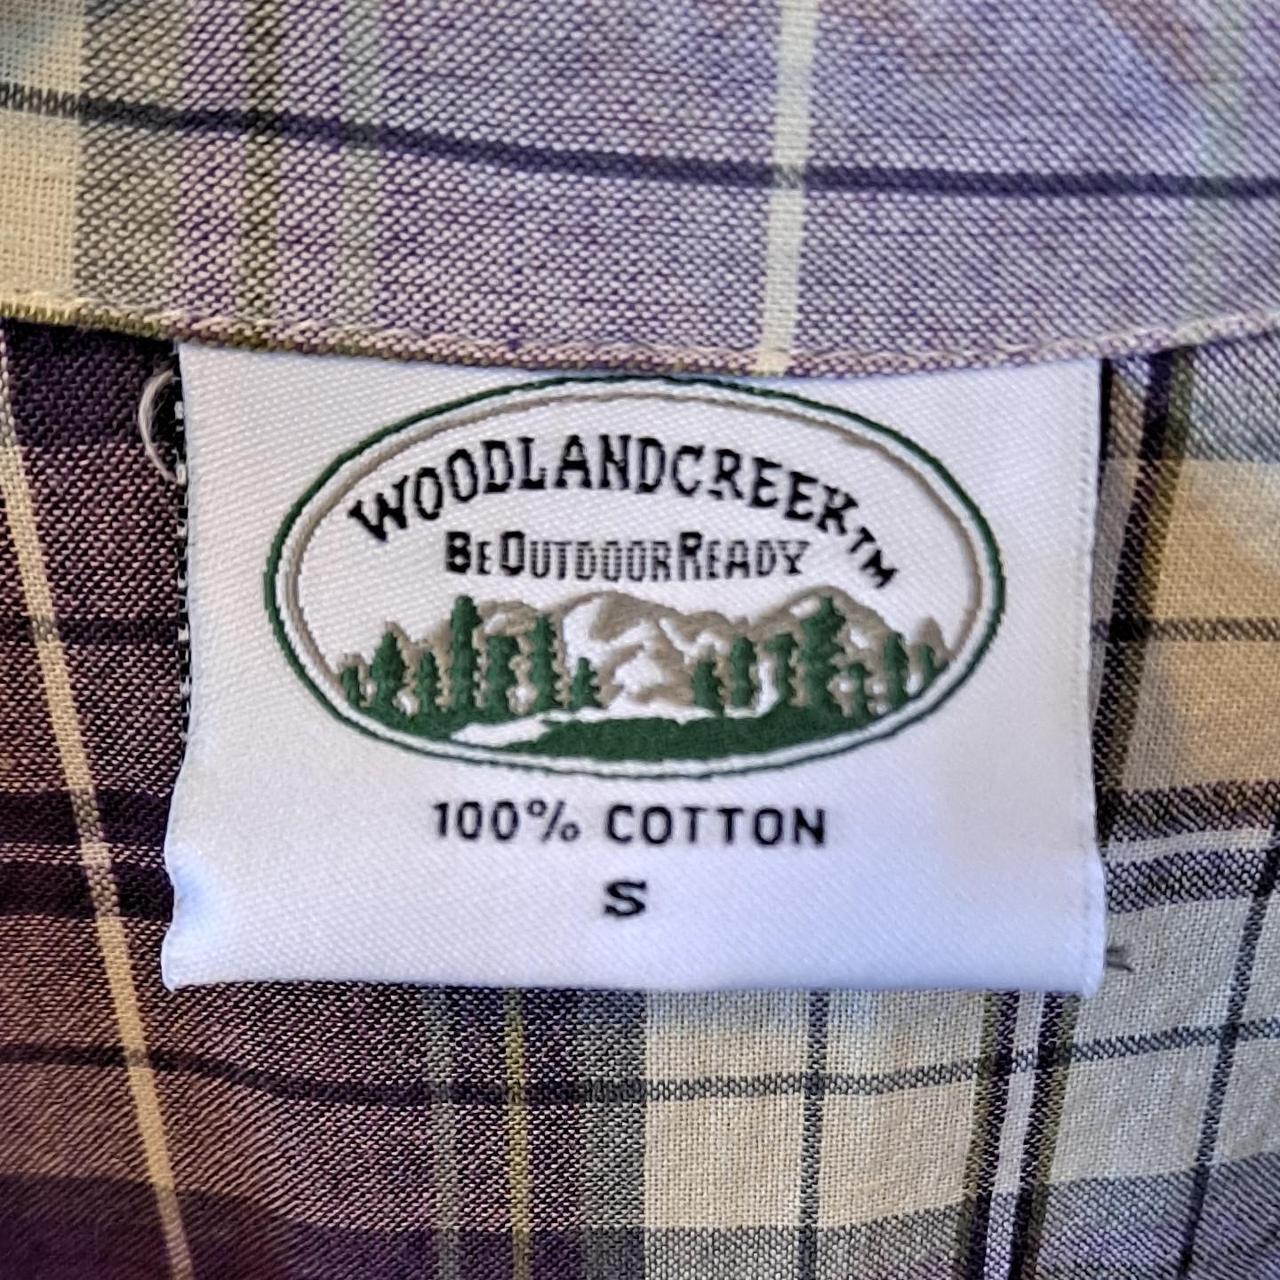 Product Image 2 - Woodland Creek purple lightweight flannel
Never